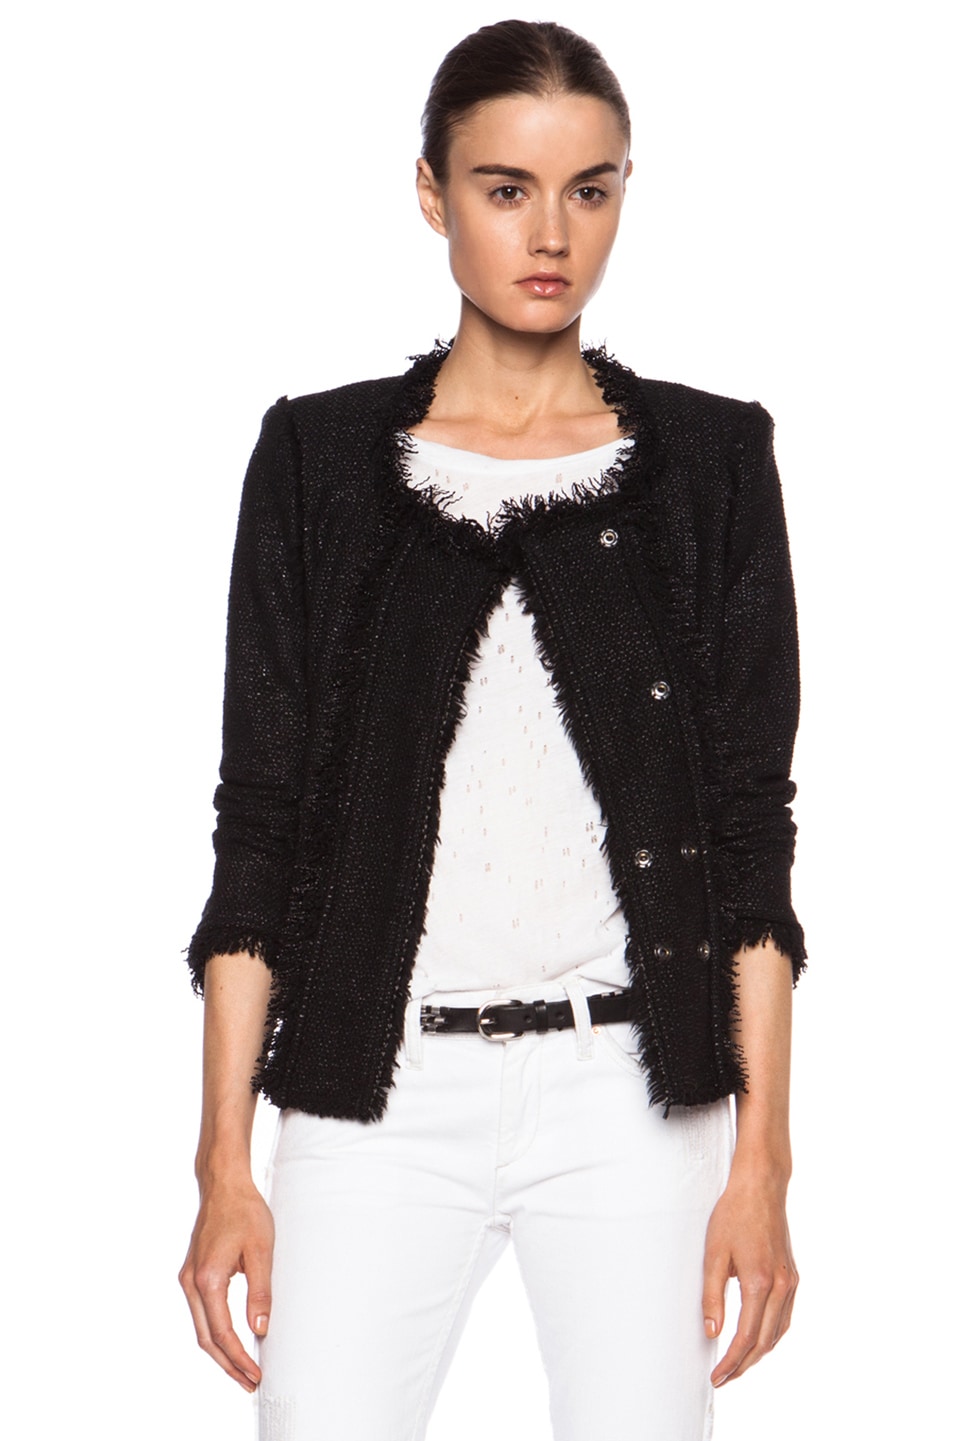 Isabel Marant Henrick Dark Cowens Cotton-Blend Jacket in Black | FWRD